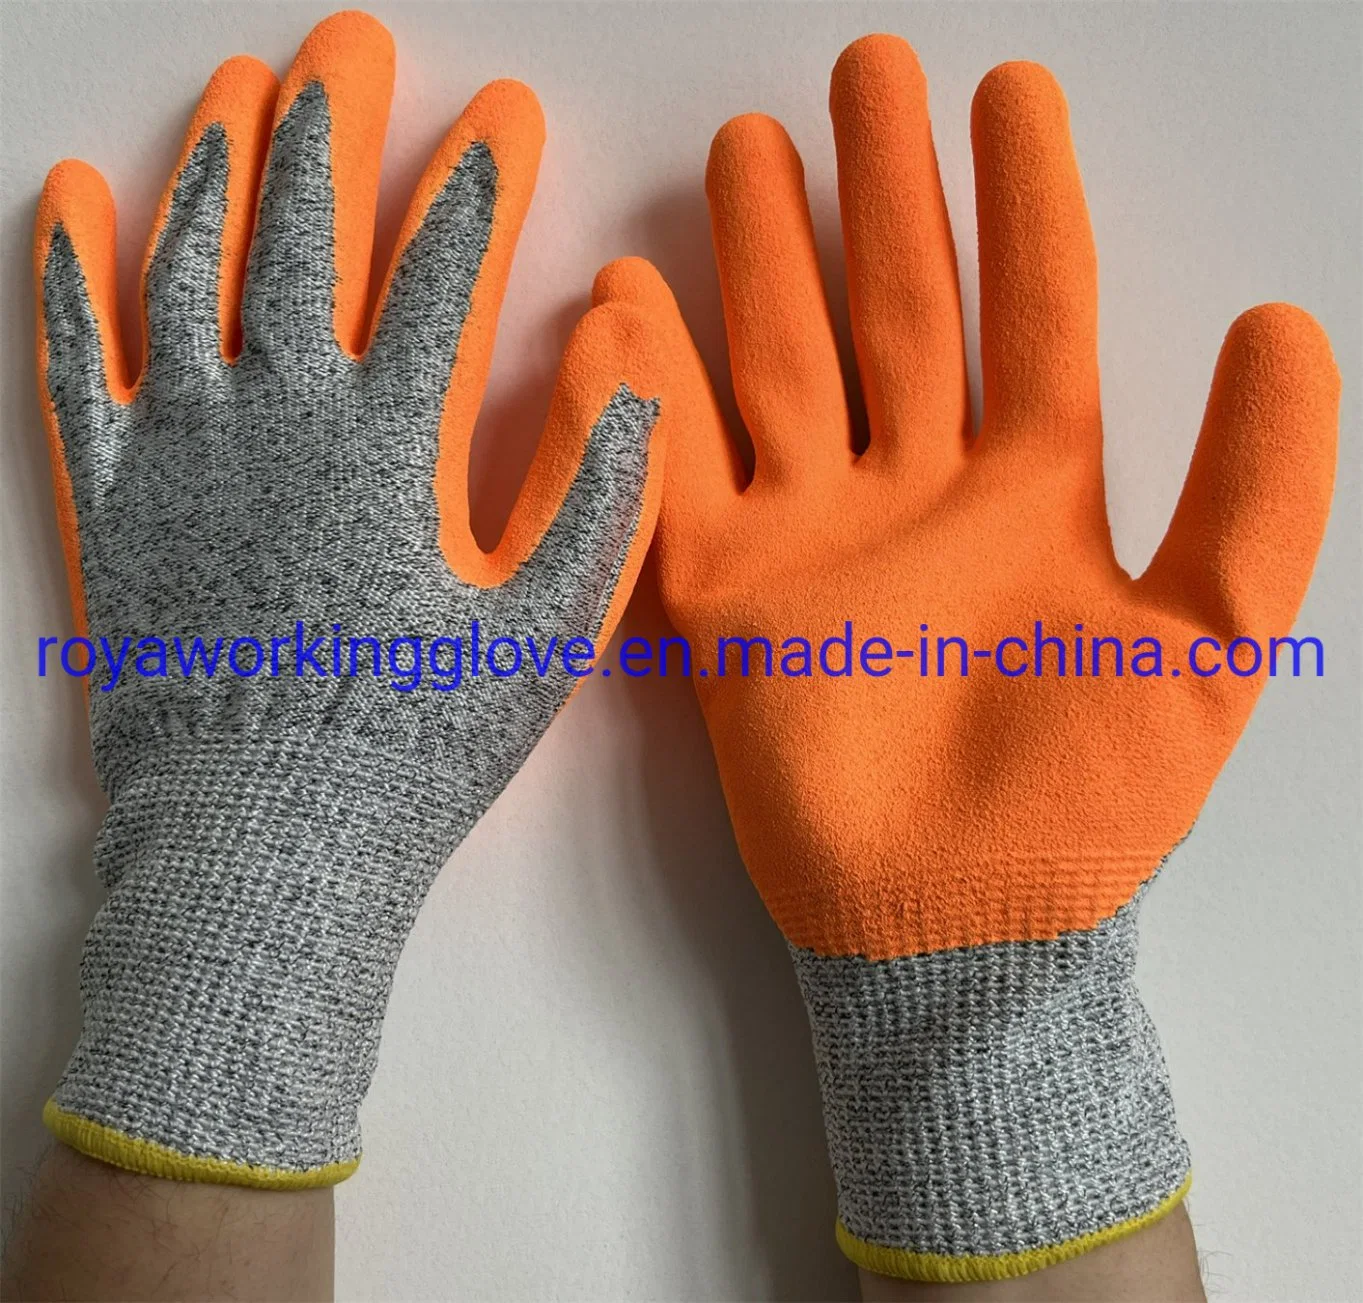 Hppe Cut Reistance Gloves/Anti-Cutting Gloves /Handling Metal Gloves /Handling Glass Gloves /Anti Cutting Gloves